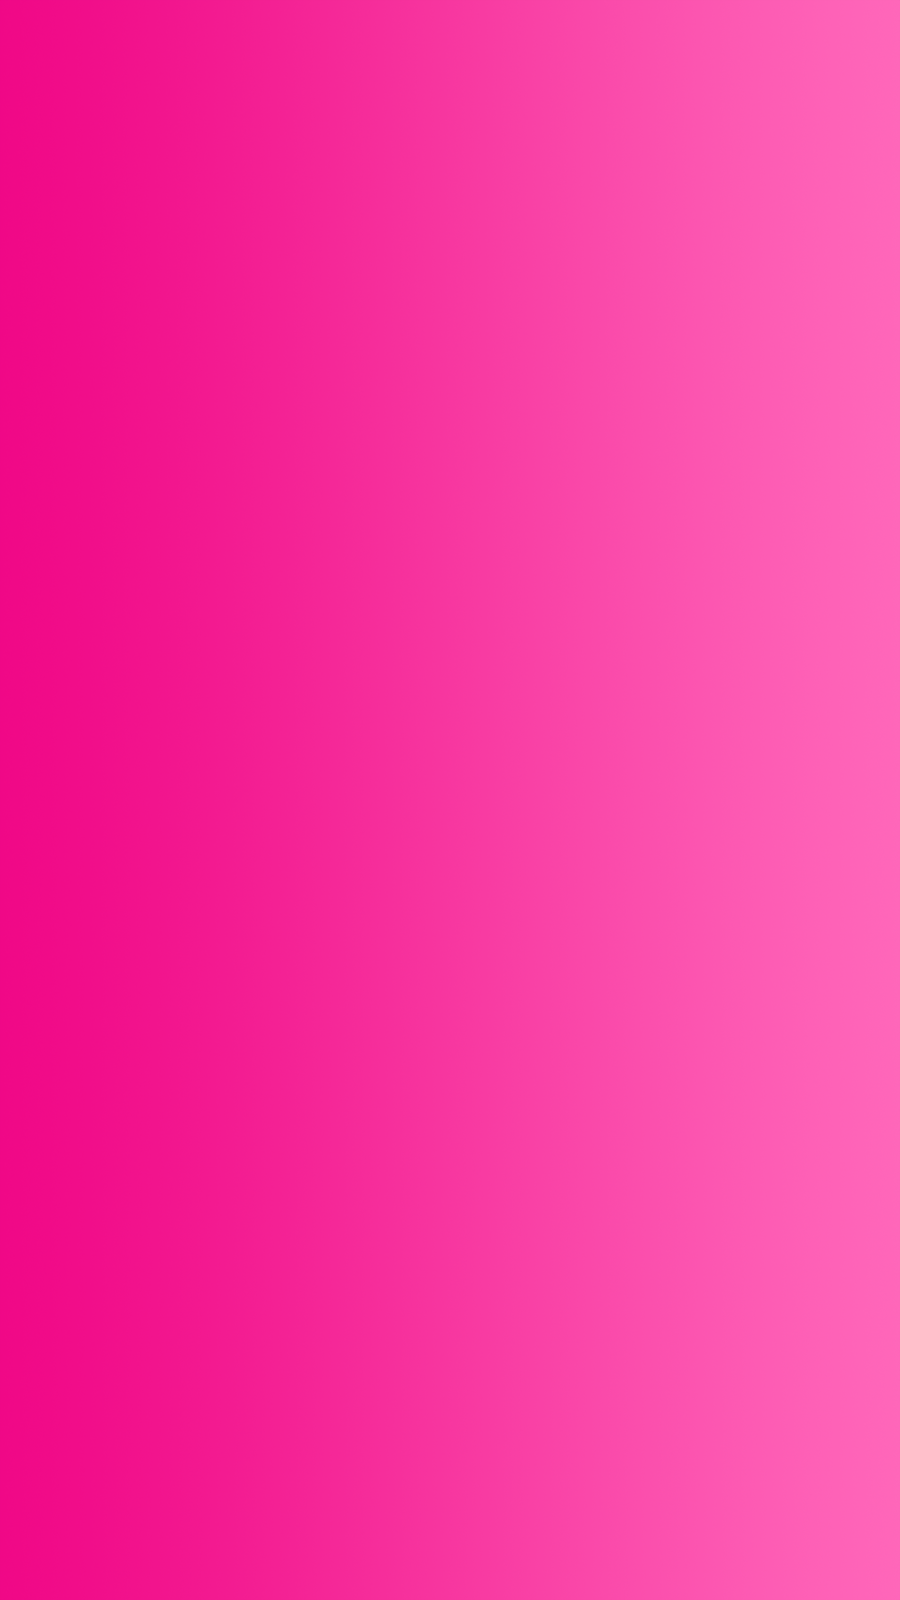 Phone Wallpaper Hd Pink - HD Wallpaper 